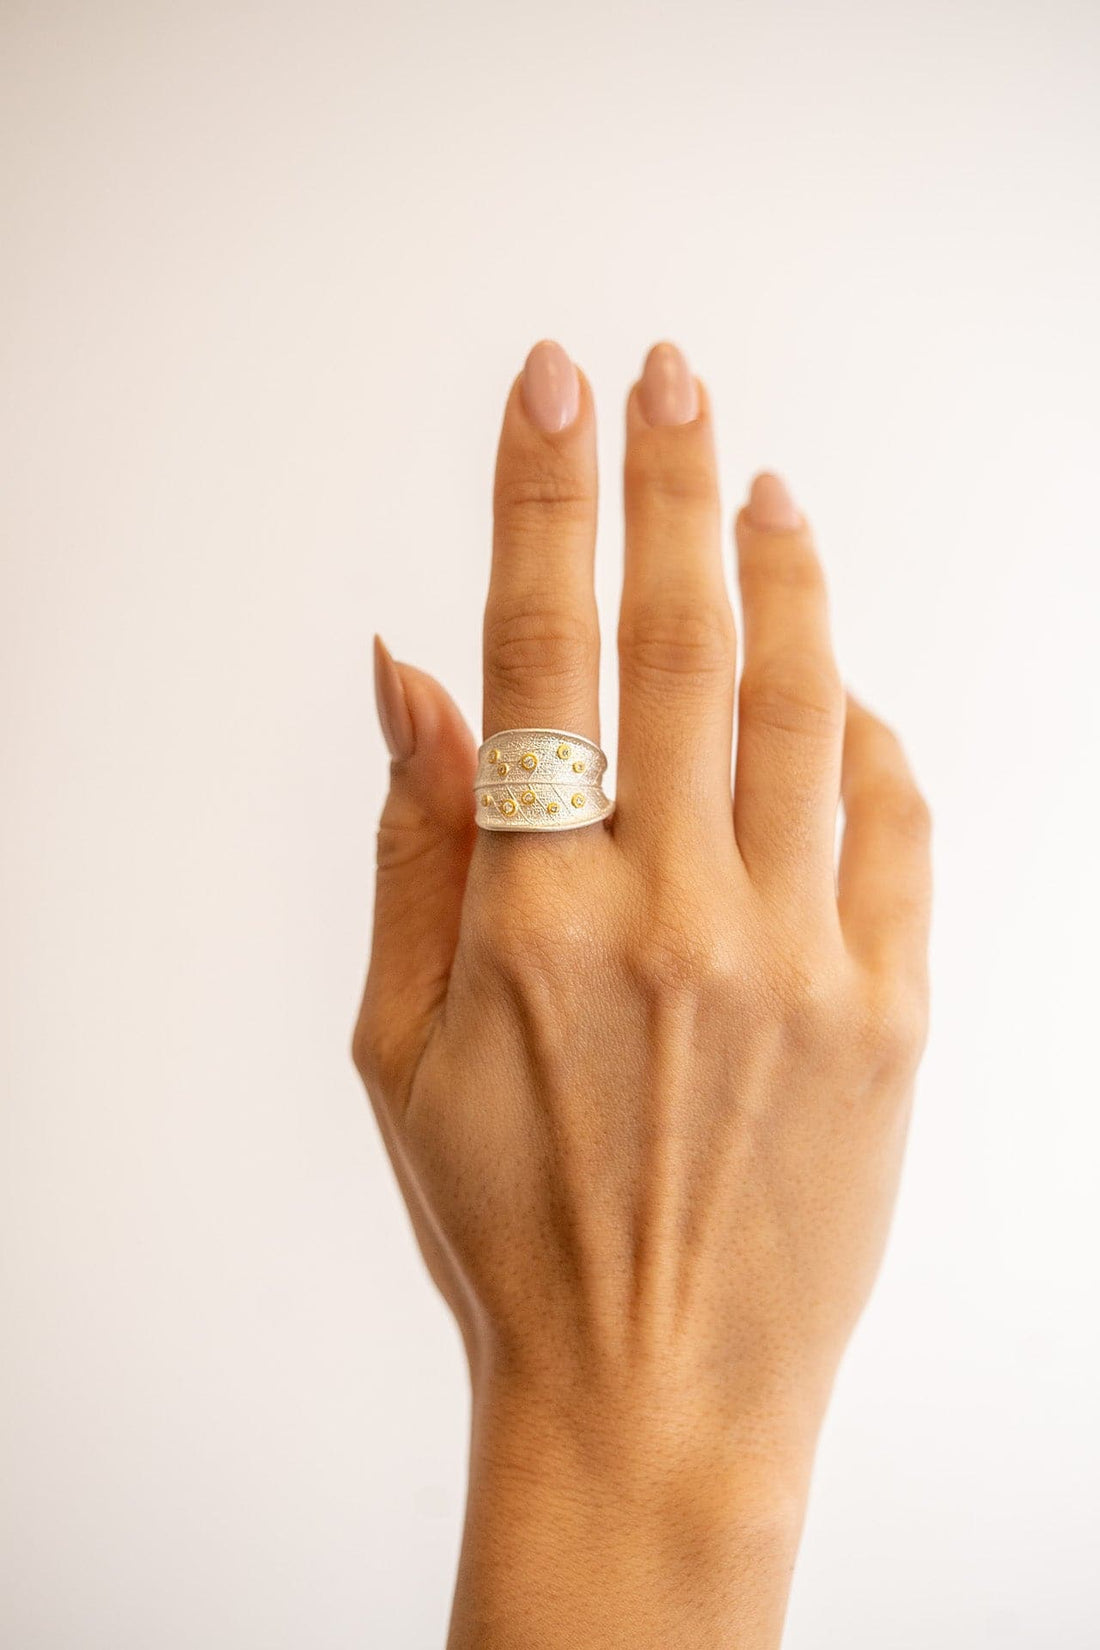 Lika Behar 'Machka Park' Sterling Silver Leaf Ring - Skeie's Jewelers